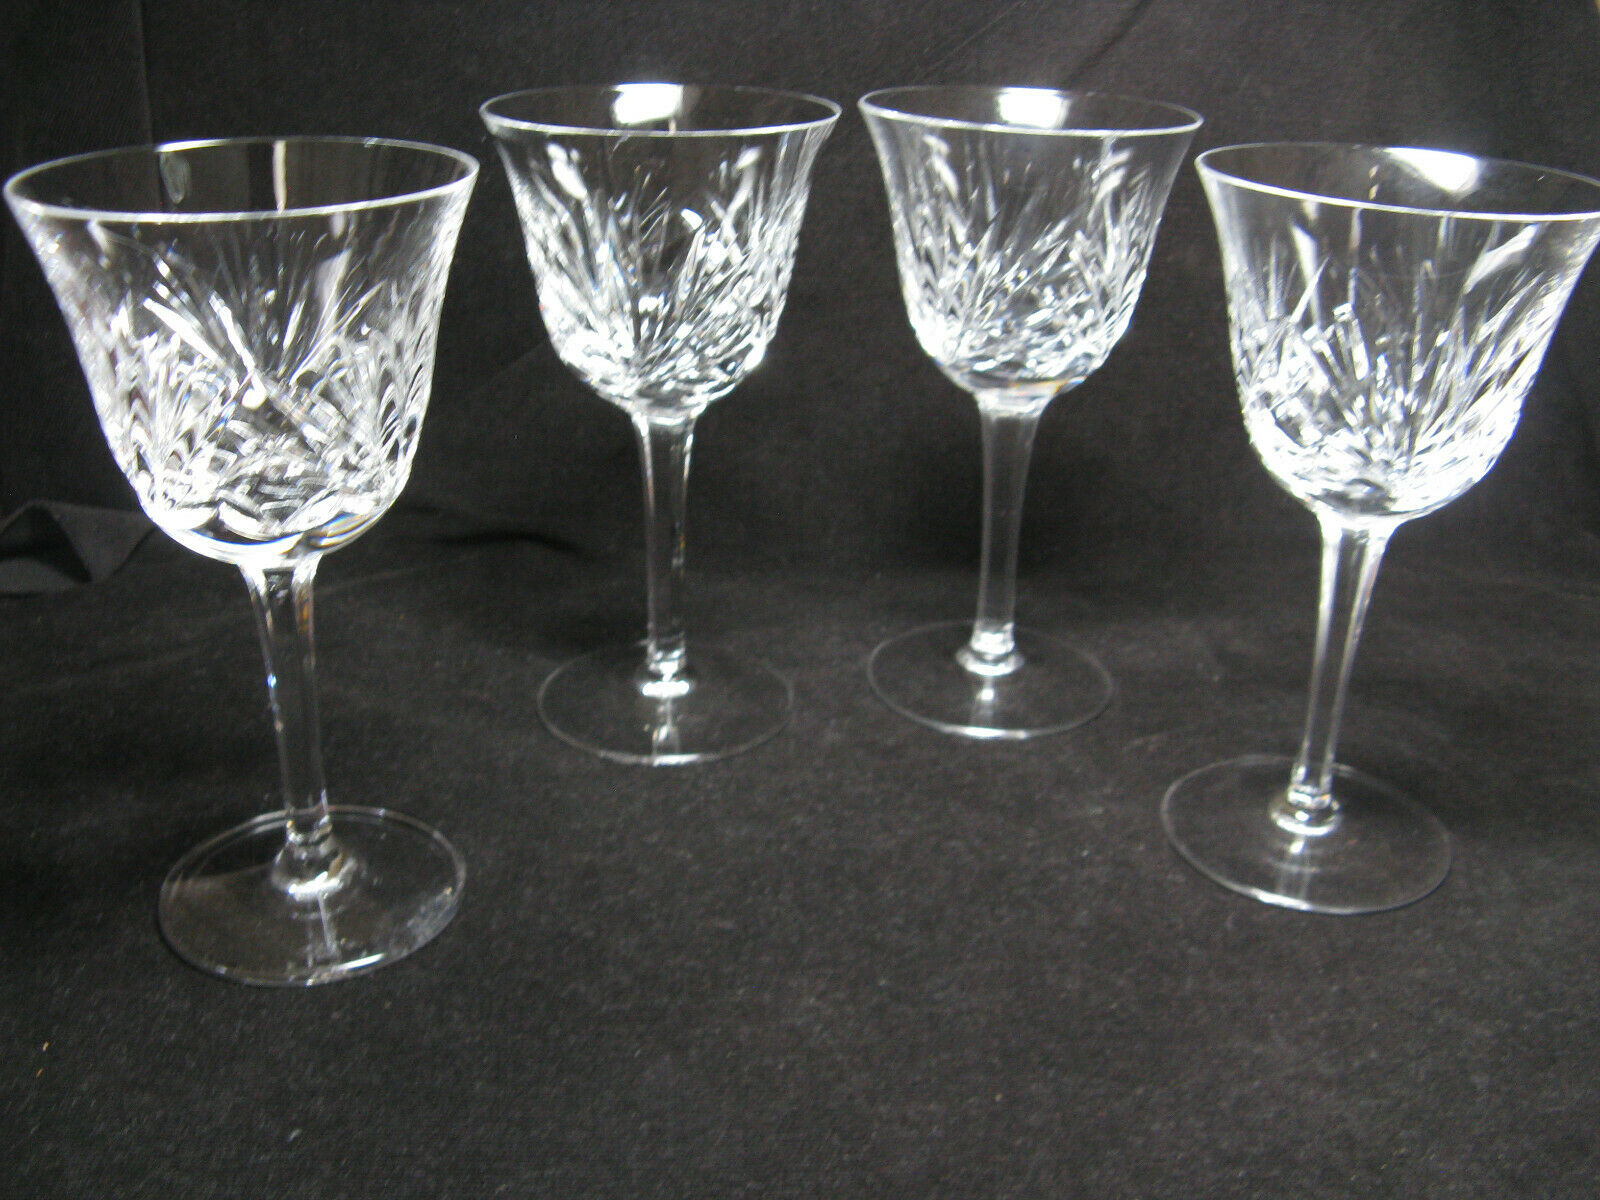 4 Gorham Crystal Cherrywood 6 7/8" Water Glass Glasses